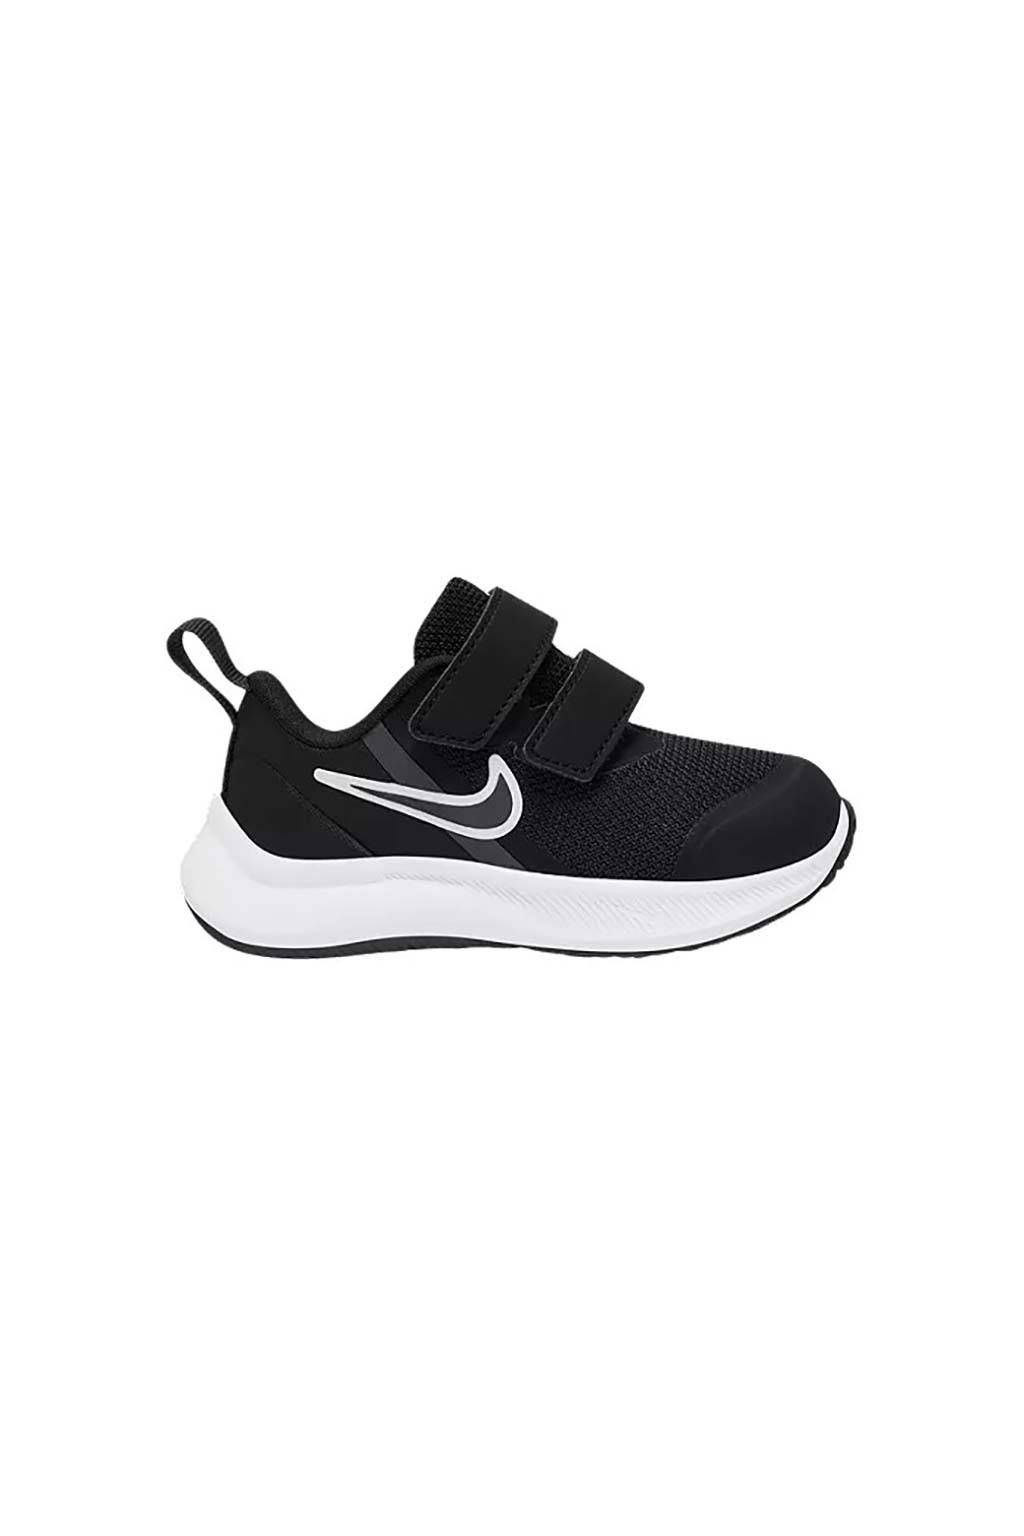 Sneakers Nike Runner 3 tdv da2778 - medinapiel.es